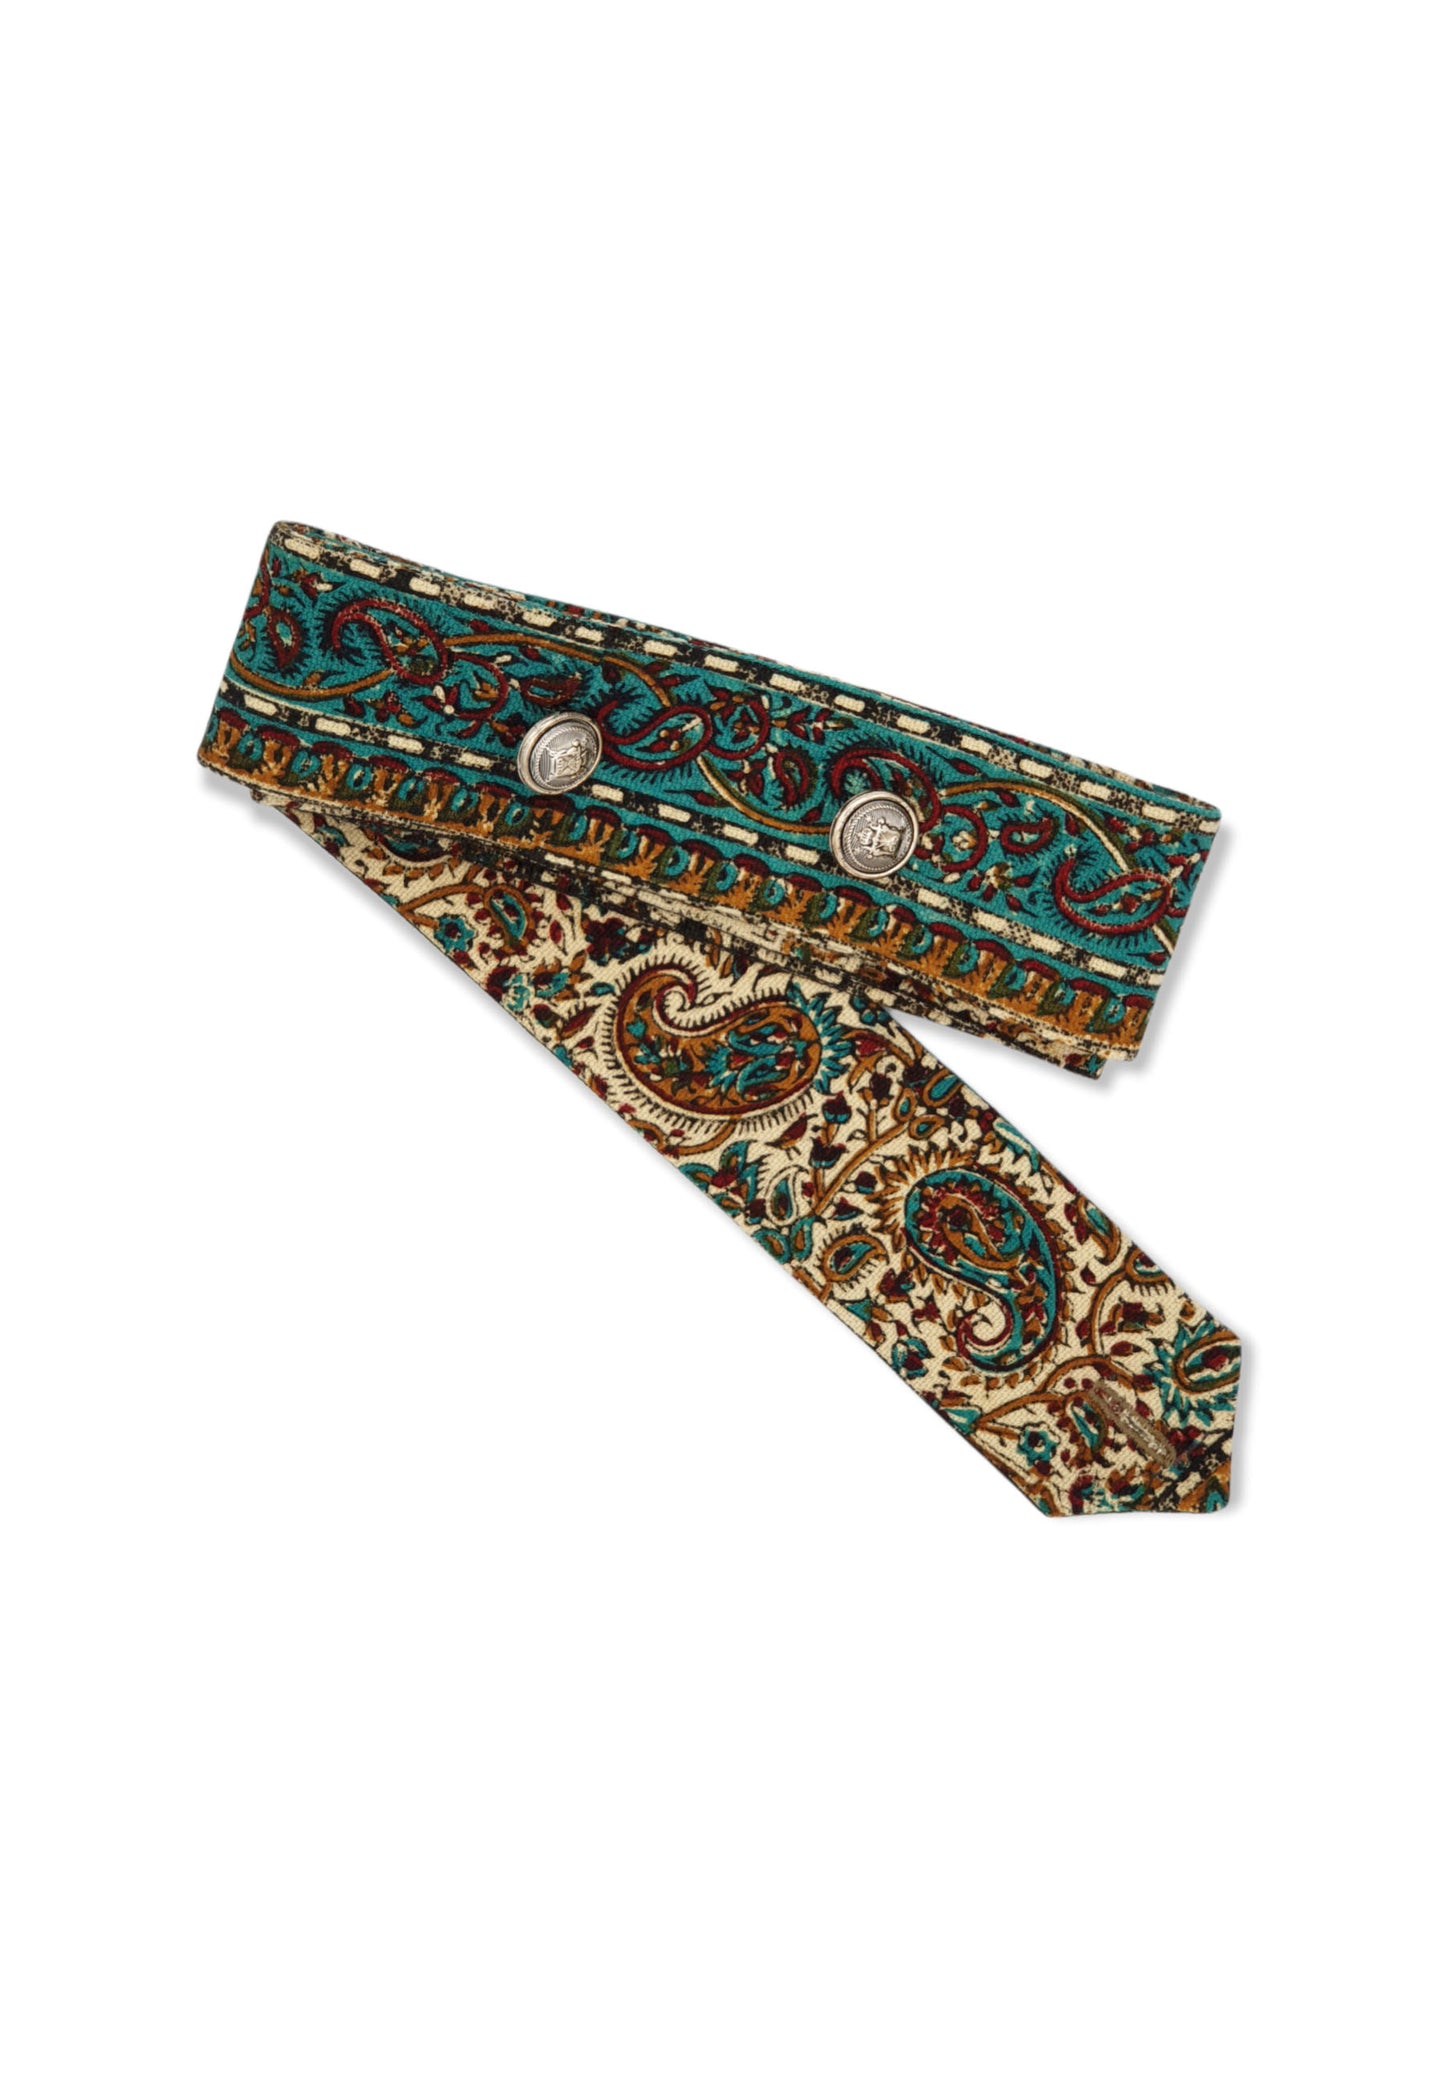 AFROZAN Handprinted Fabric Belt - Multicolor AC02